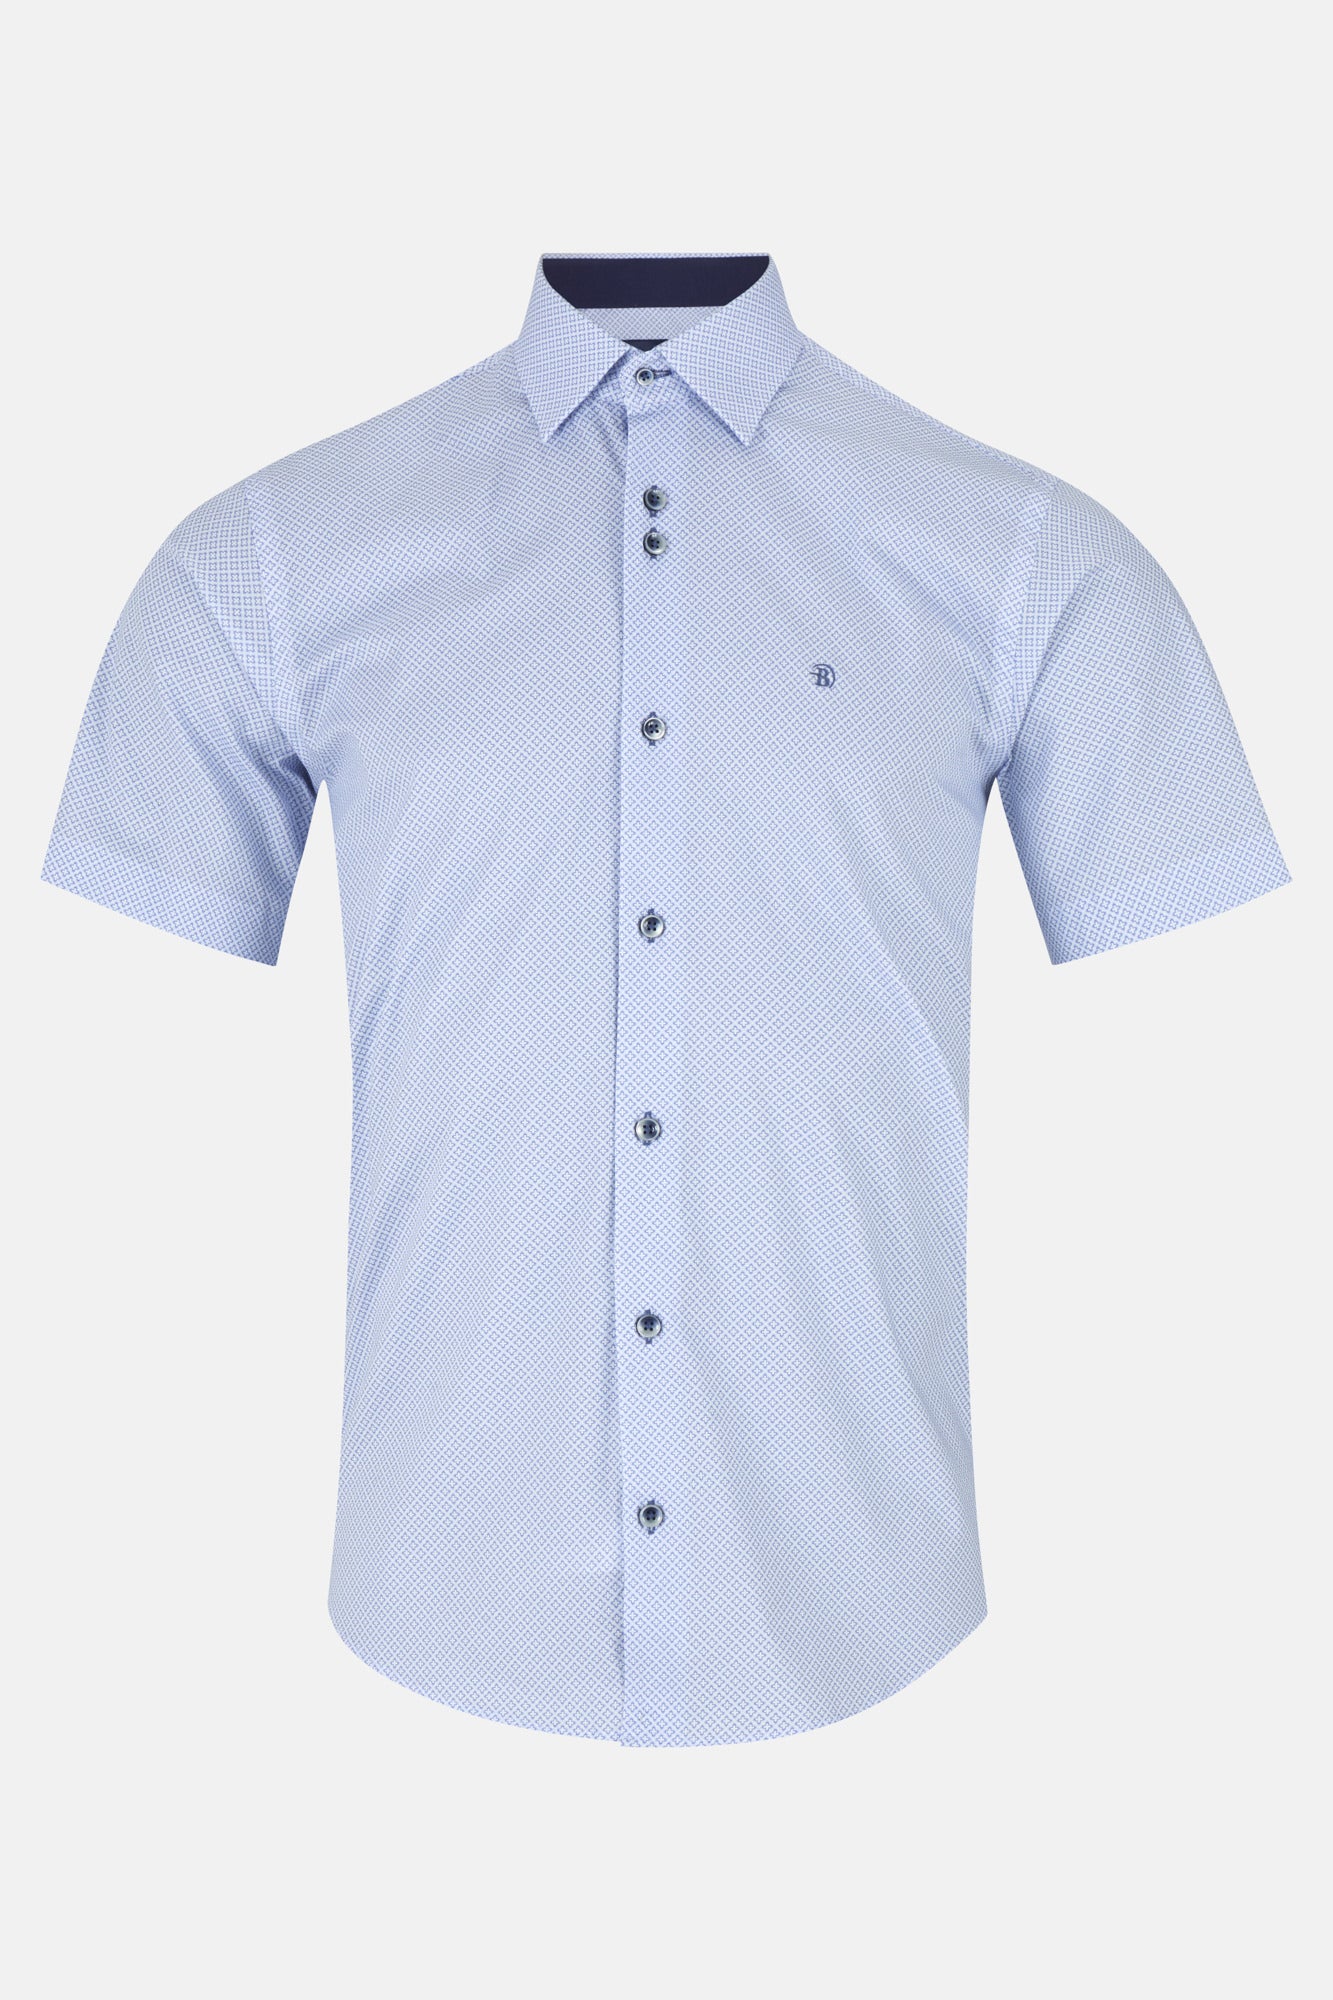 Barker Blue Short Sleeved Shirt By Benetti Menswear 